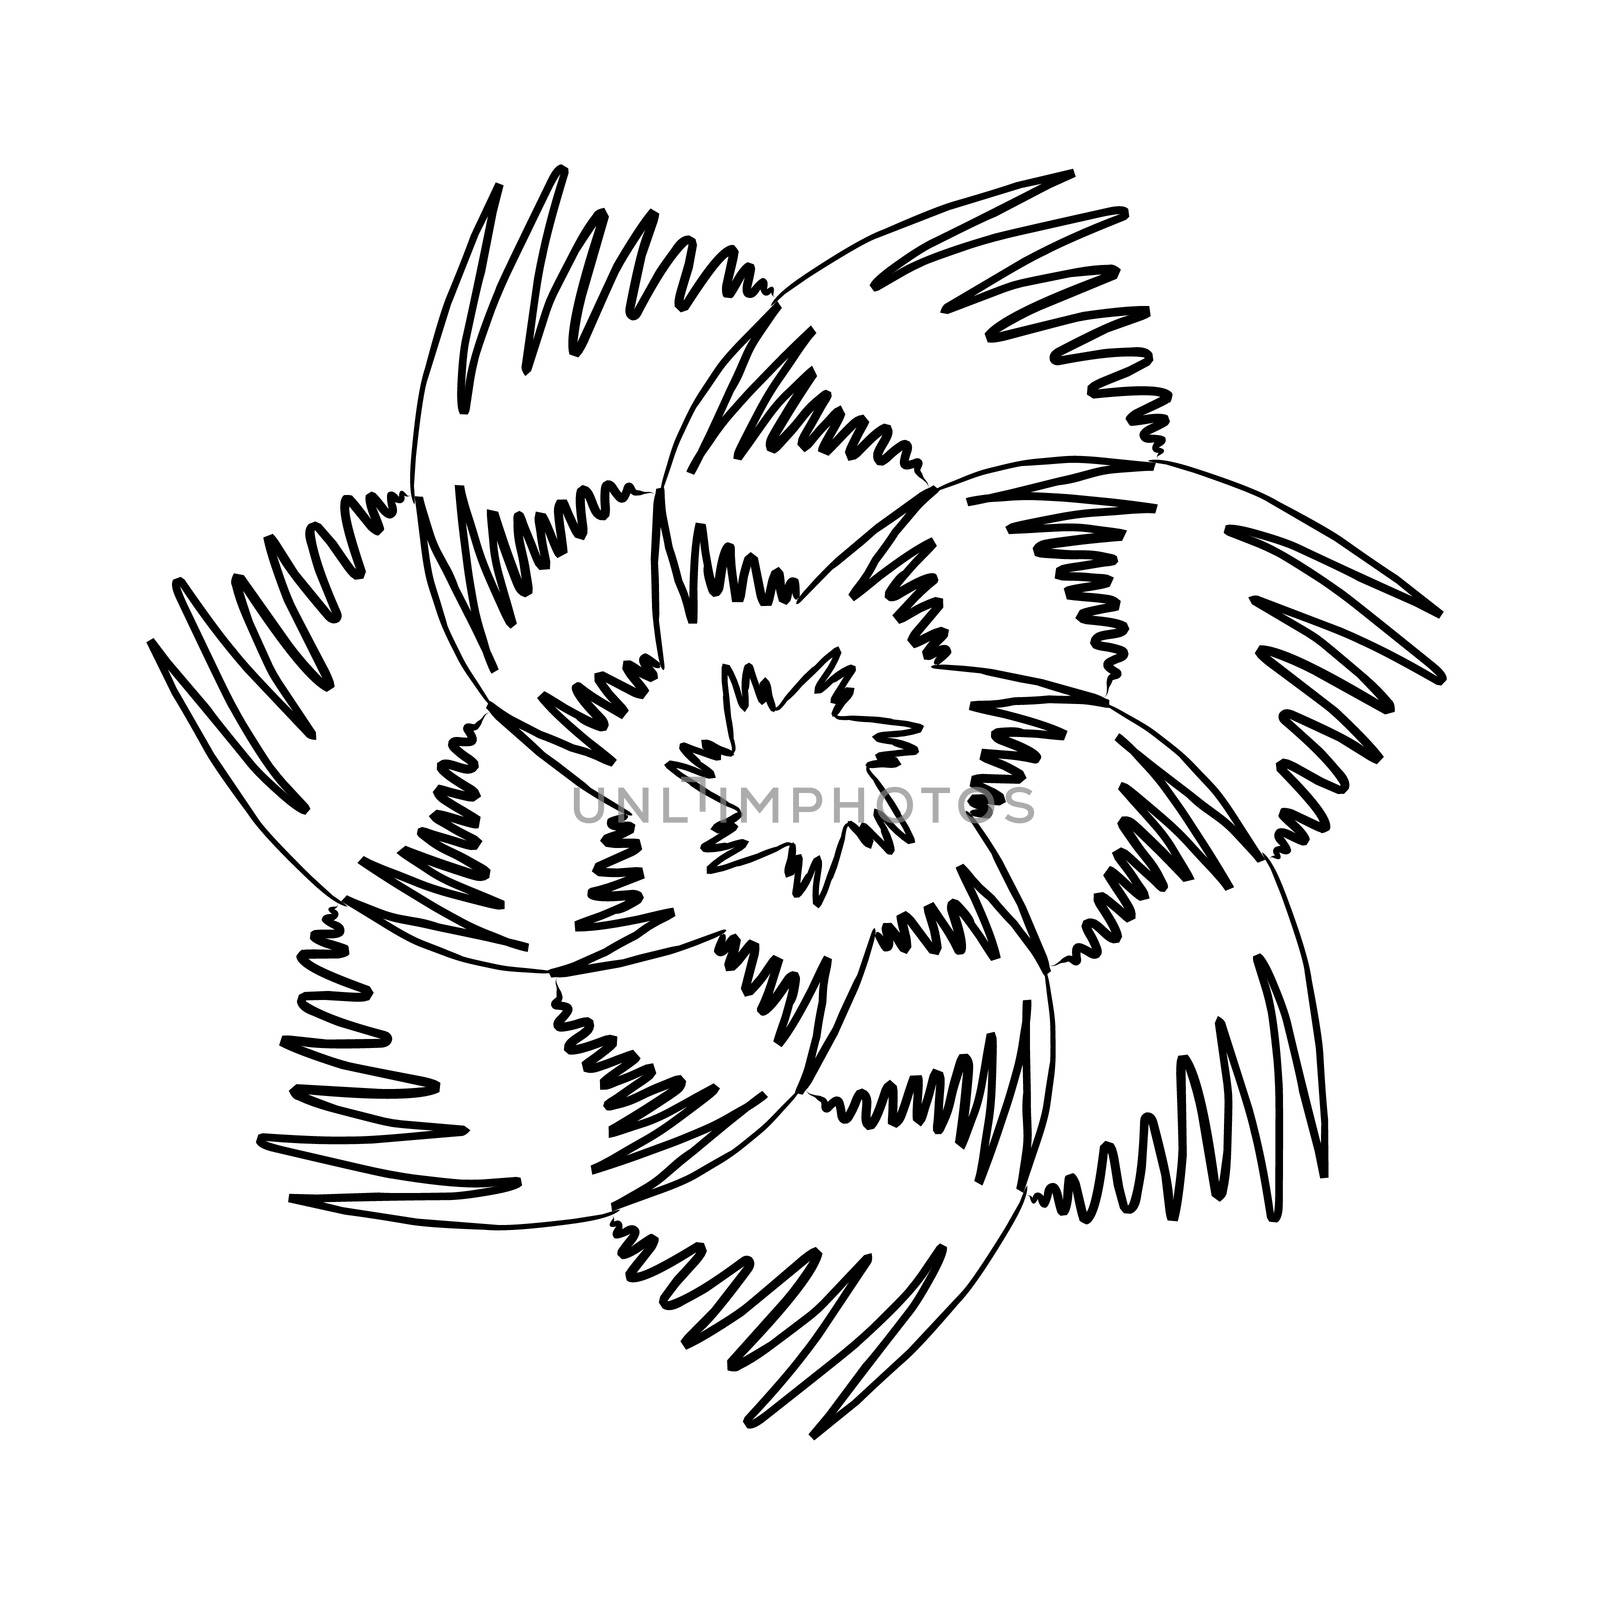 An image of a nice Mandala black and white